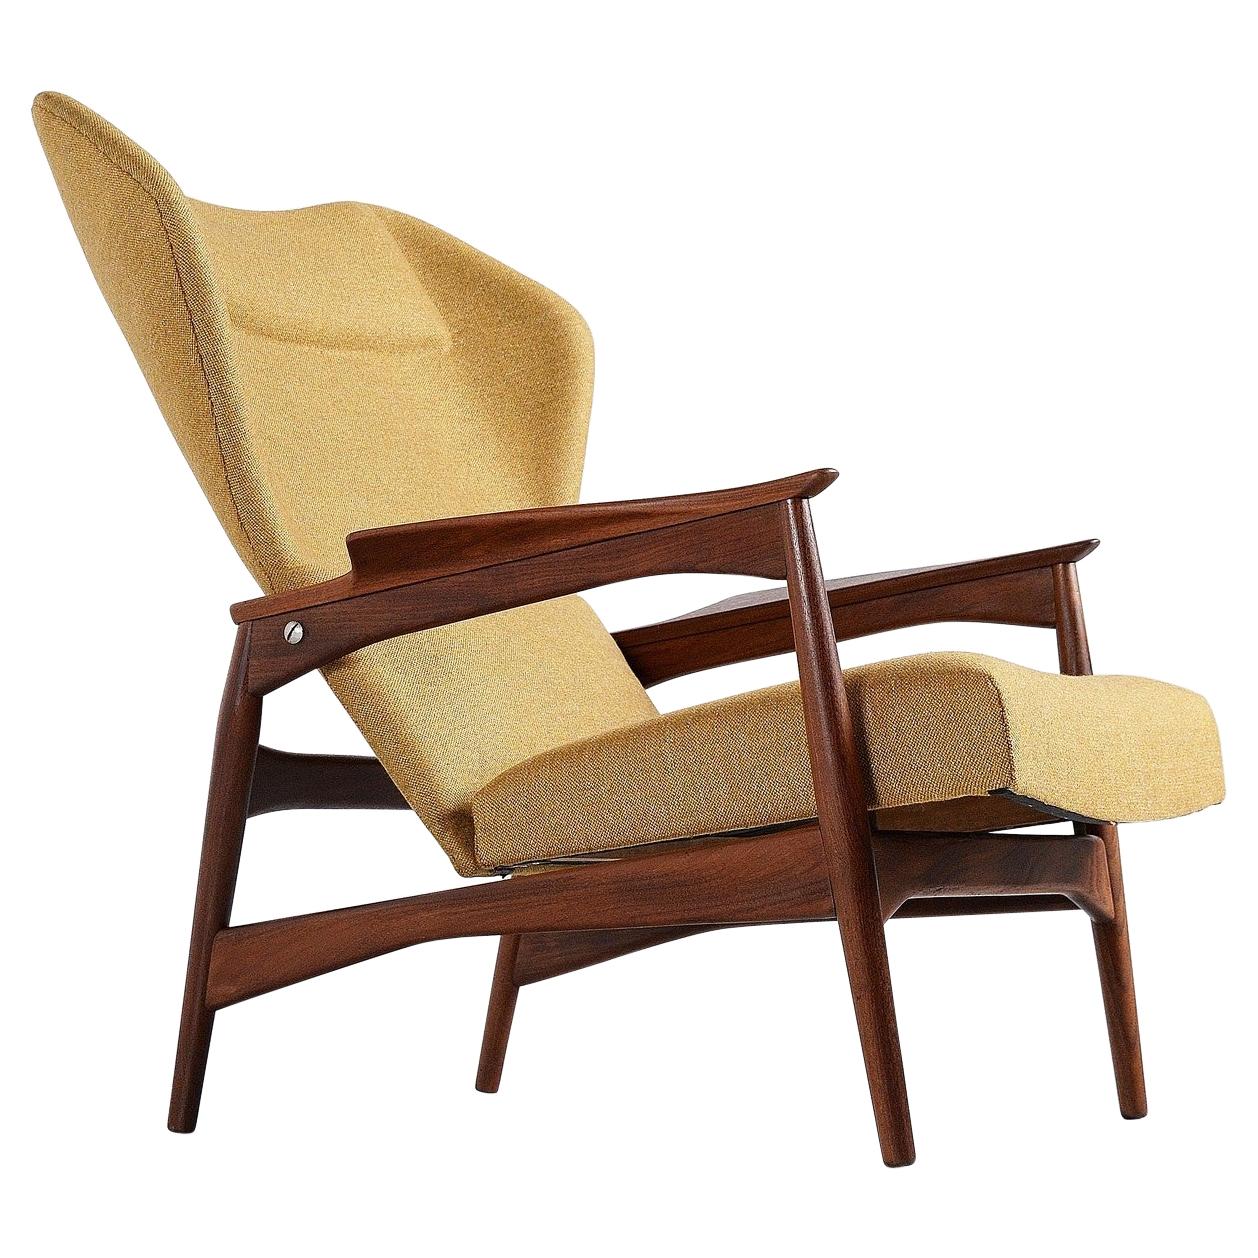 Ib Kofod Larsen Carlo Gahrn Lounge Chair, Denmark, 1954